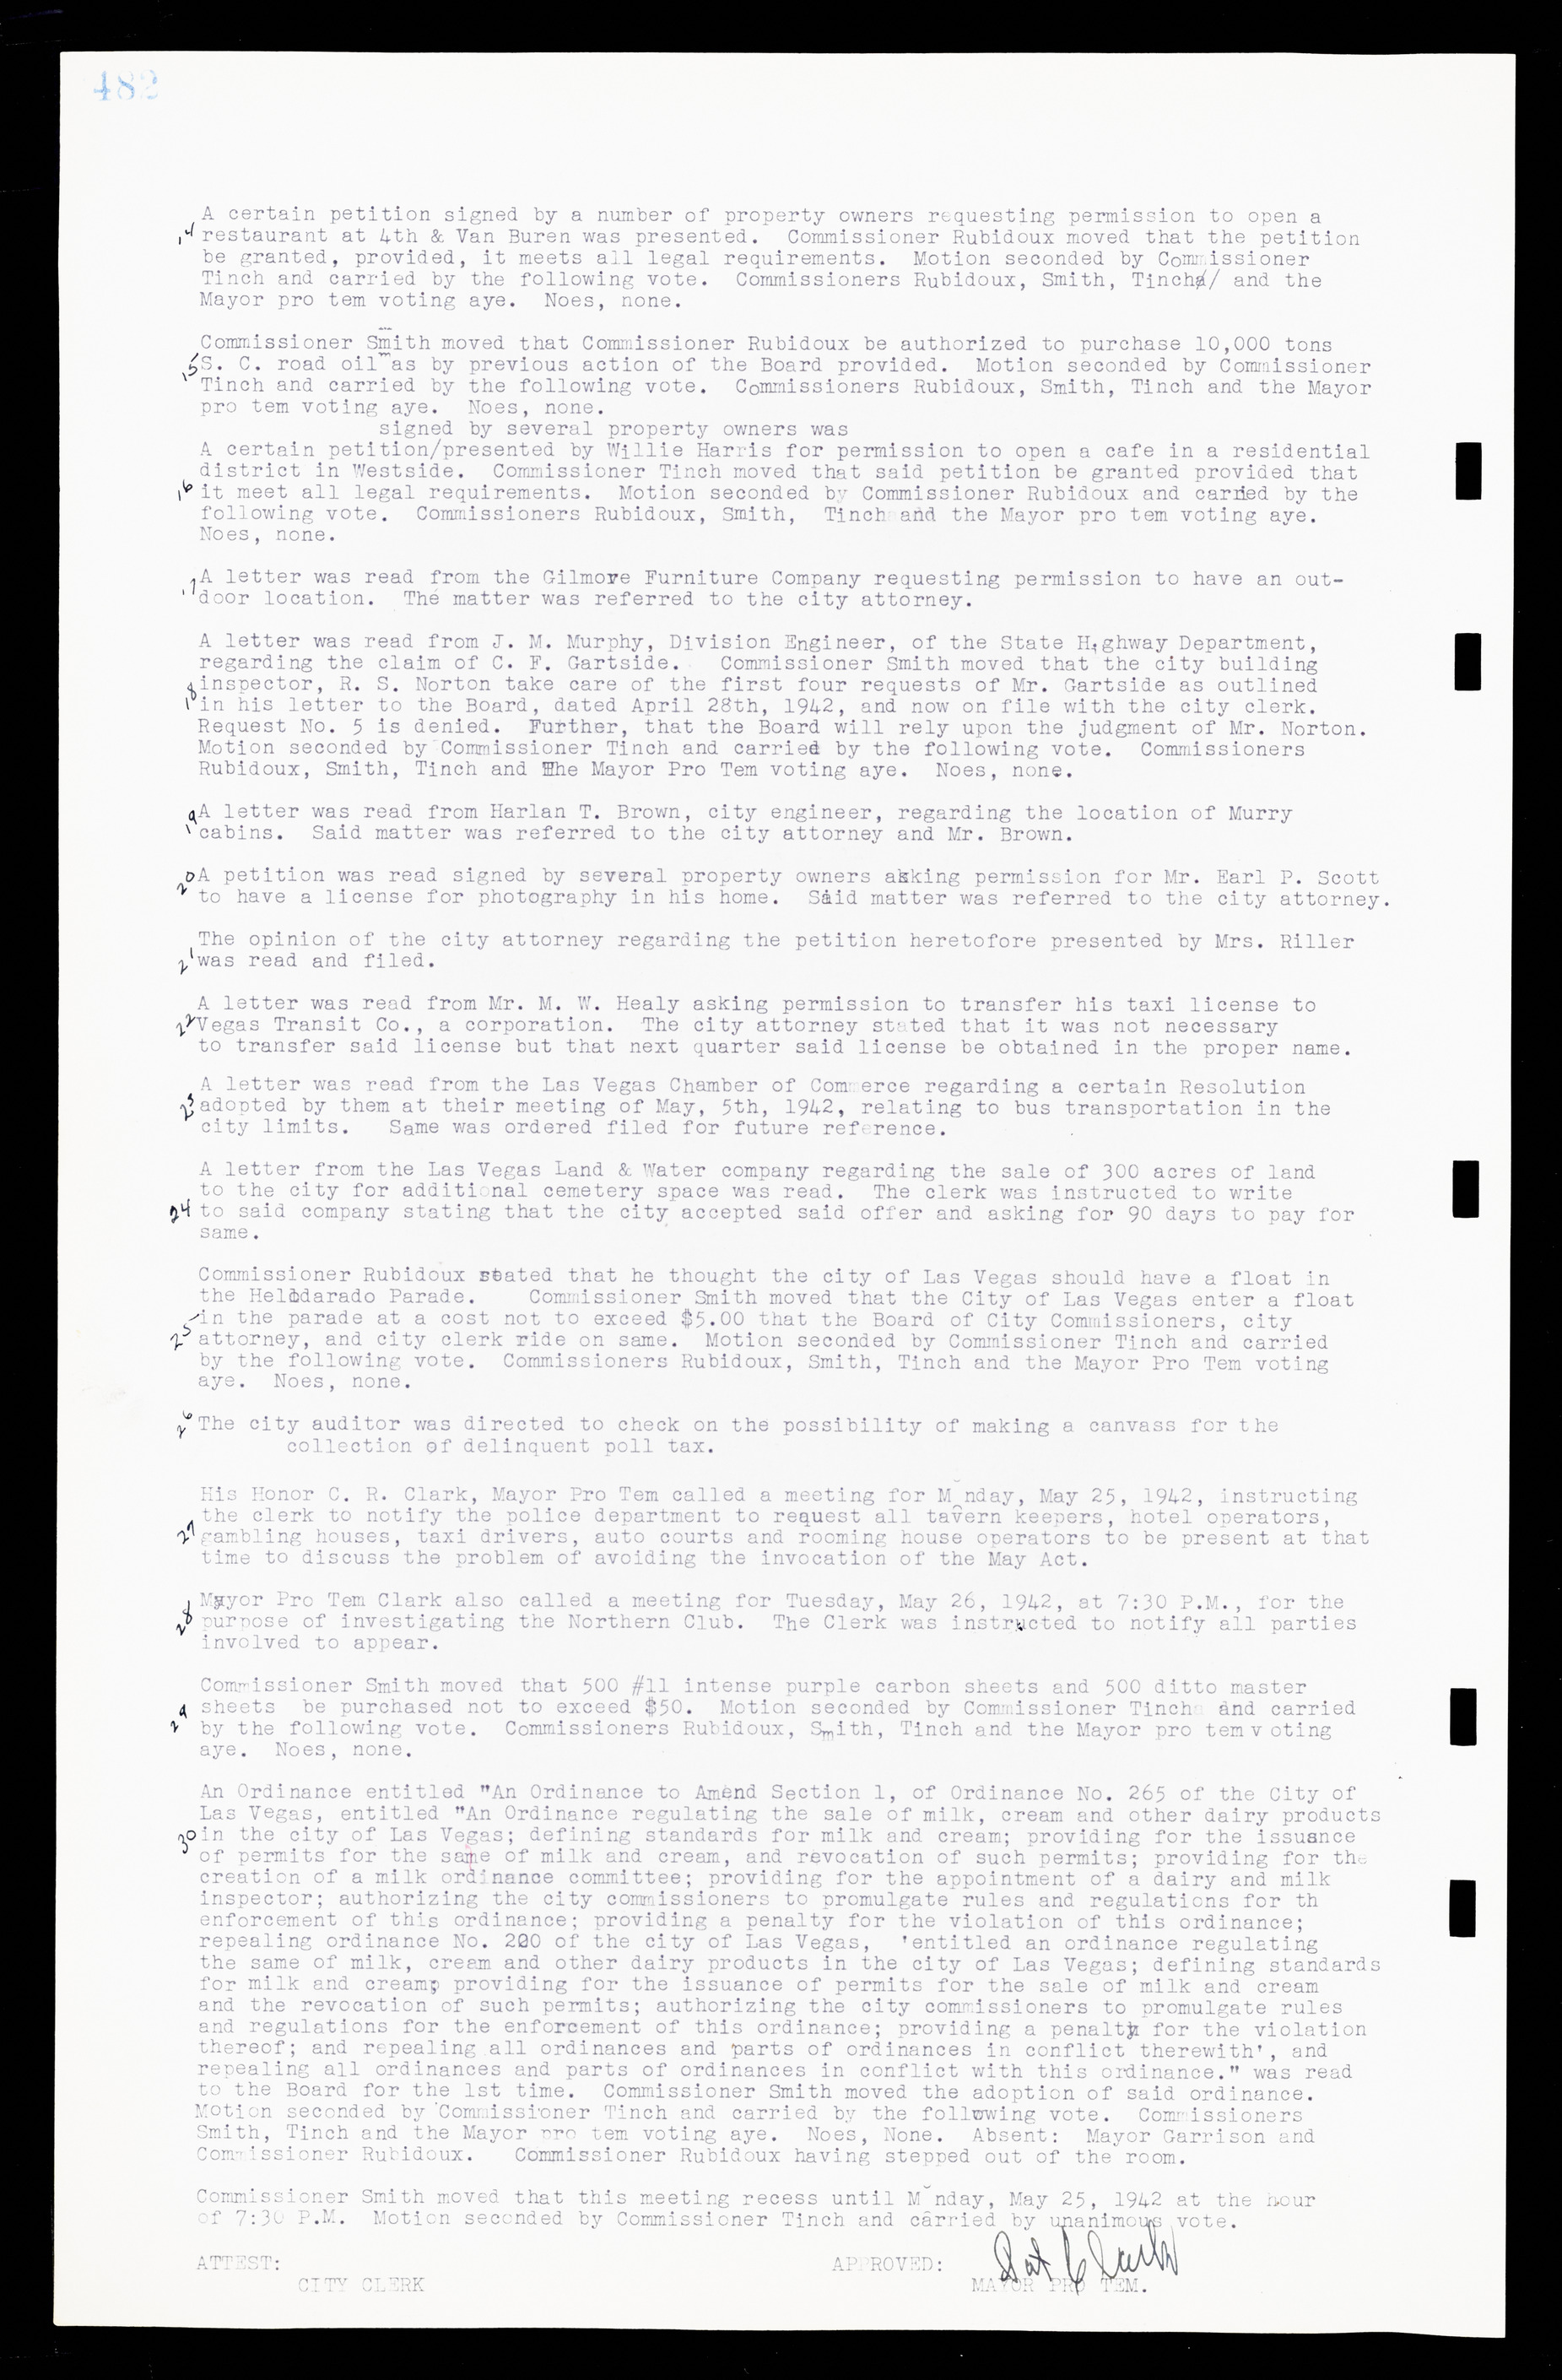 Las Vegas City Commission Minutes, February 17, 1937 to August 4, 1942, lvc000004-510